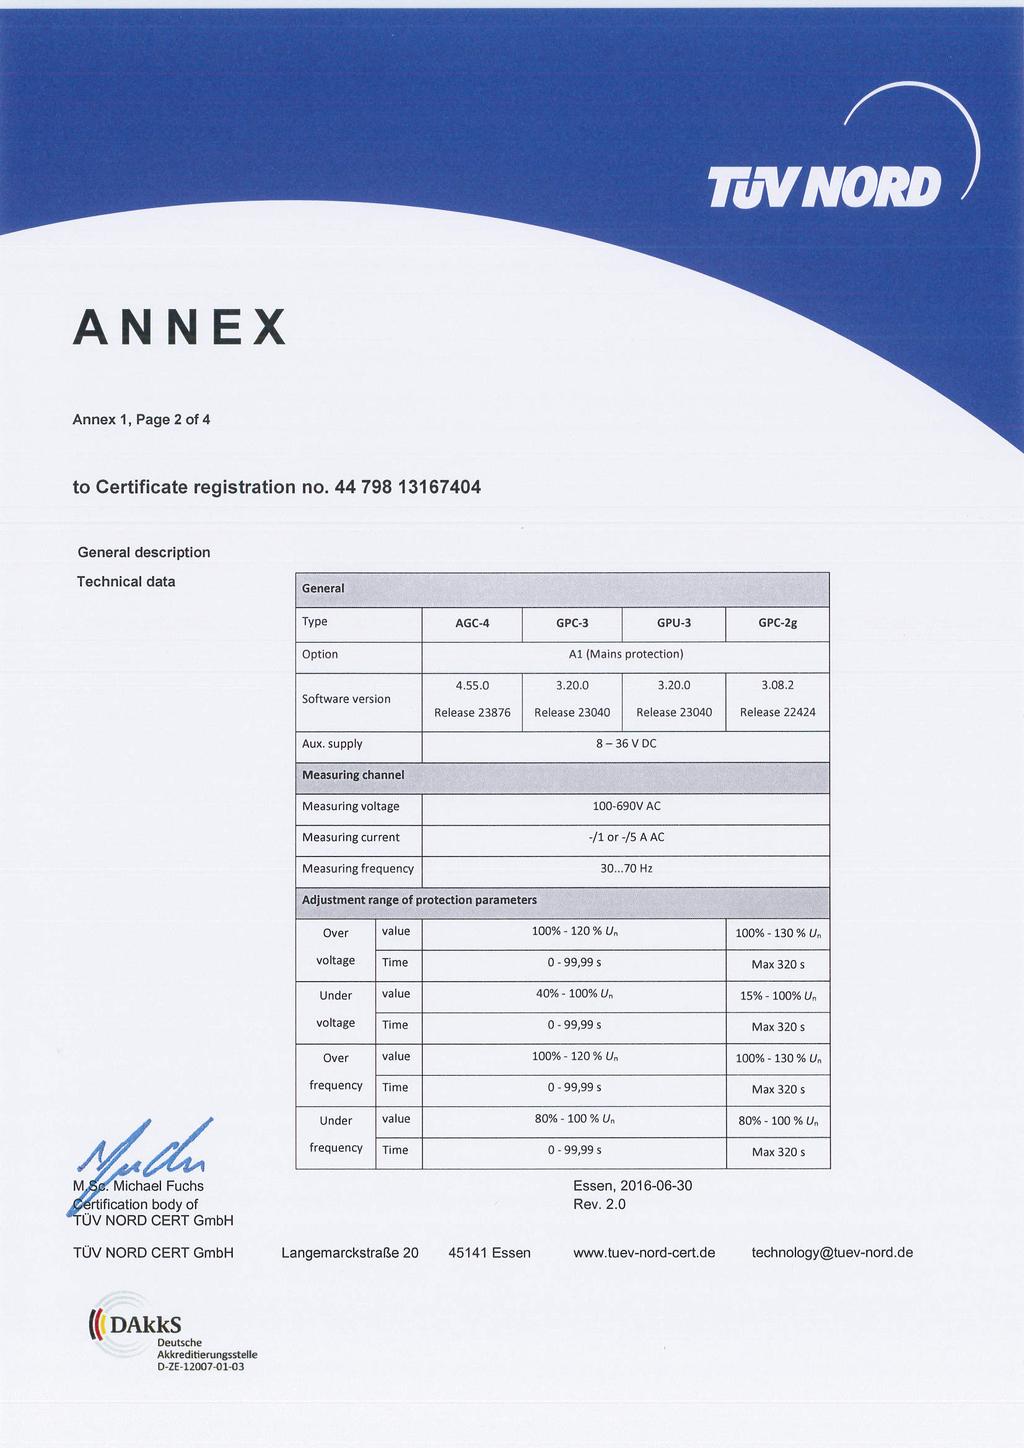 Tu'V NOC-11) ) ANNEX Annex 1, Page 2 of 4 General description Technical data General Type AGC-4 GPC-3 GPU-3 GPC-2g Option Al (Mains protection) Software version 4.55.0 Release 23876 3.20.